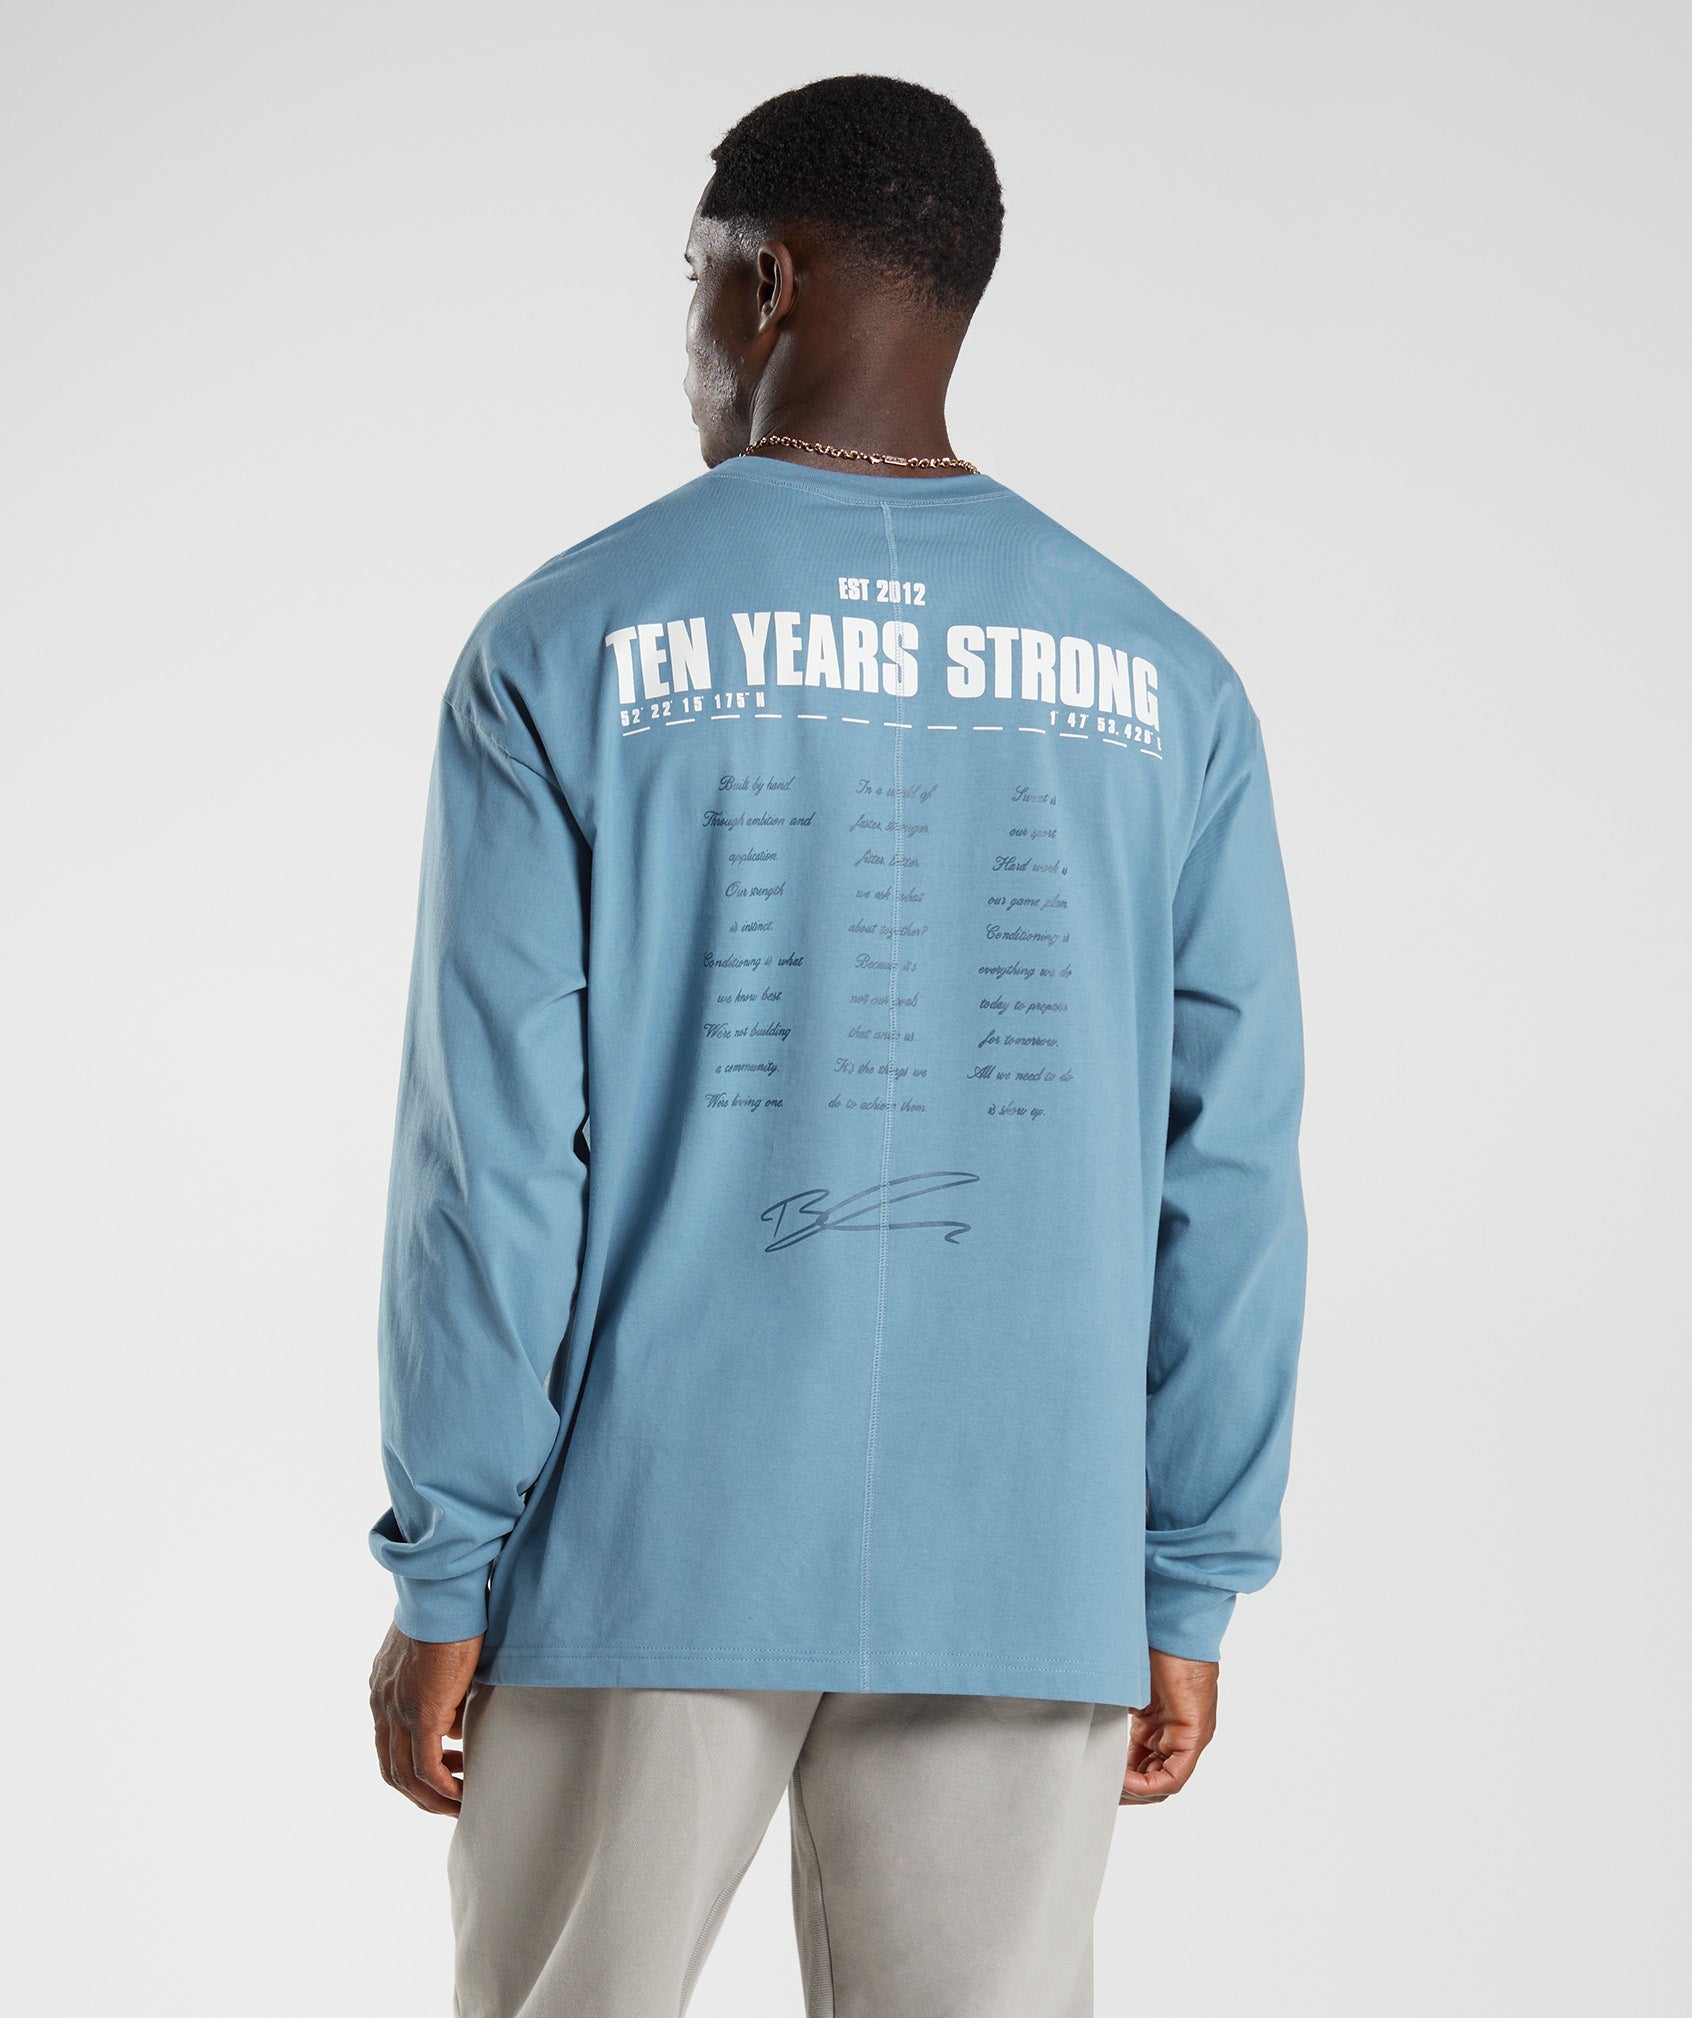 GS10 Year Oversized Long Sleeve T-Shirt in Denim Blue